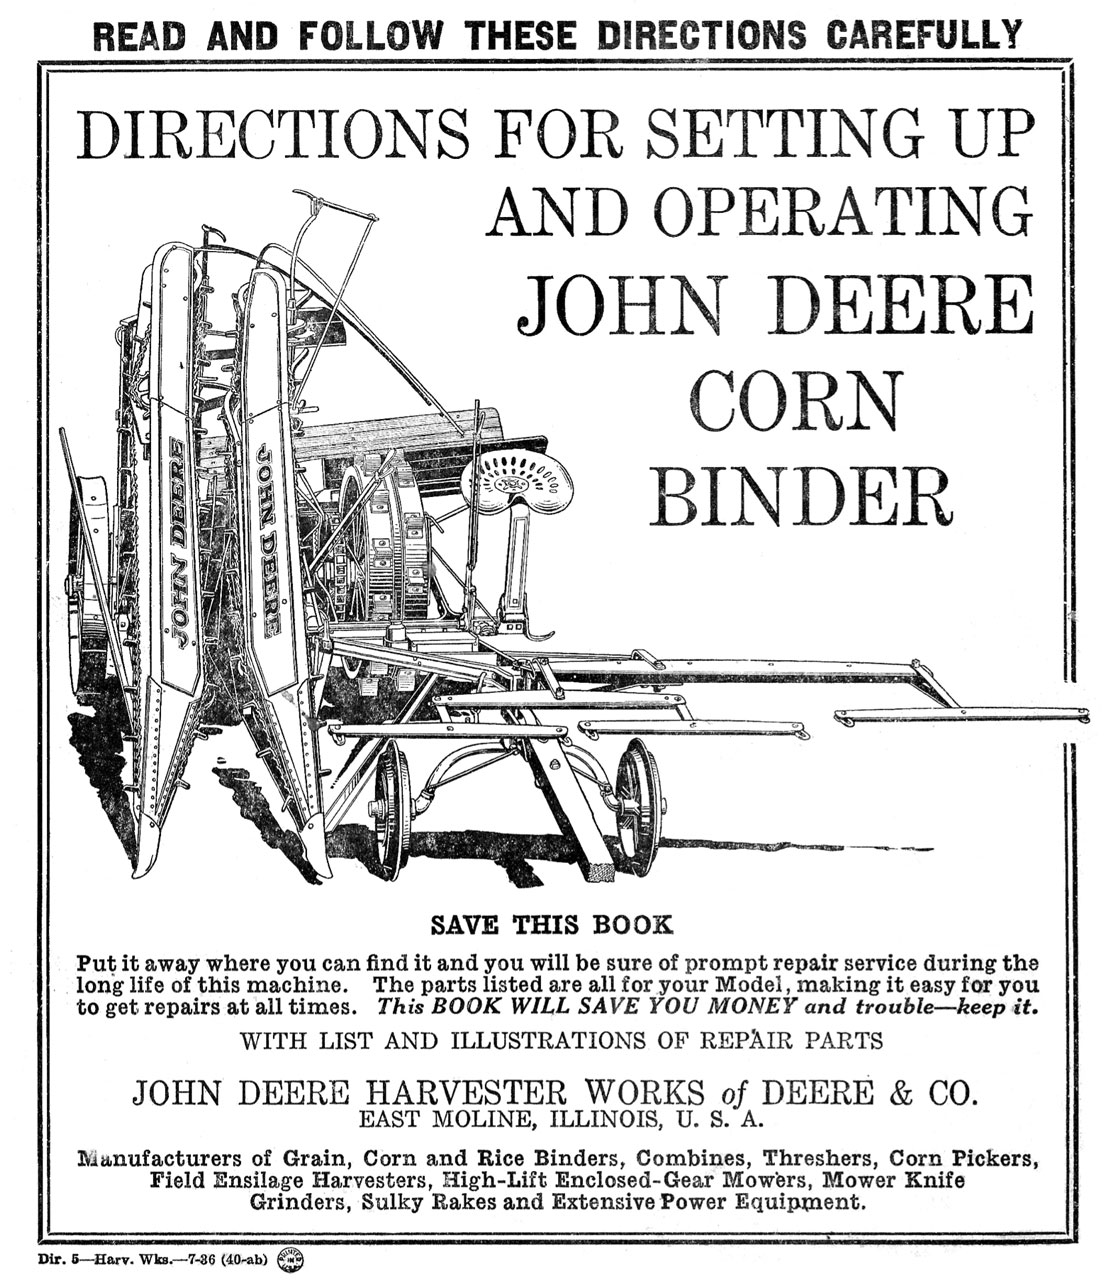 John Deere Corn Binder (Manual M-166)